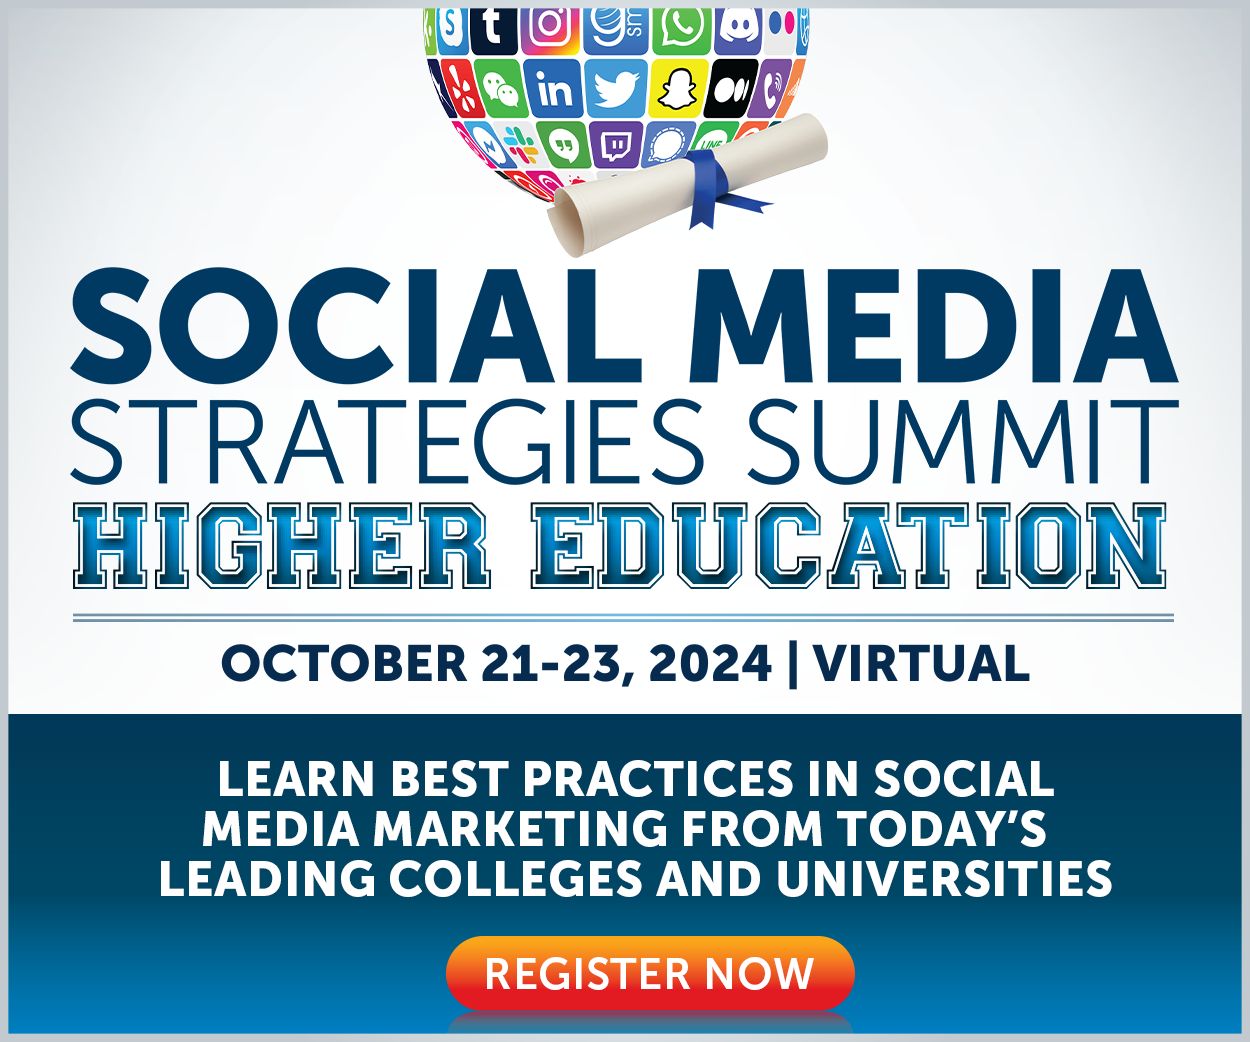 Social Media Strategies Summit Higher Education, Online Event